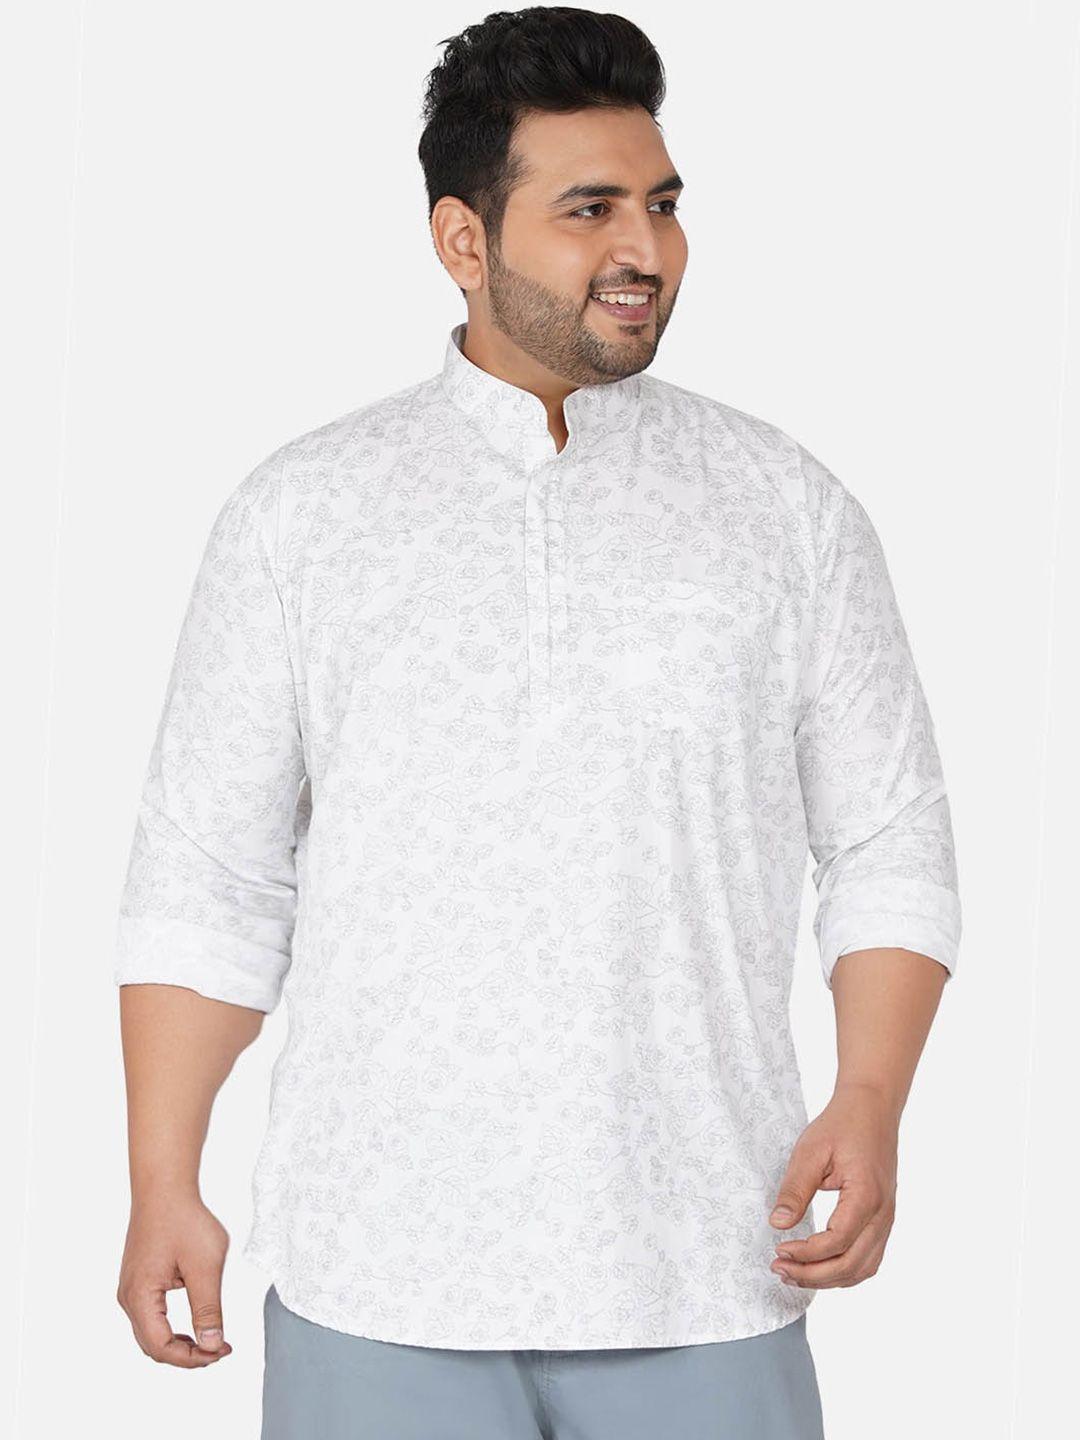 john-pride-plus-size-floral-printed-pure-cotton-casual-shirt